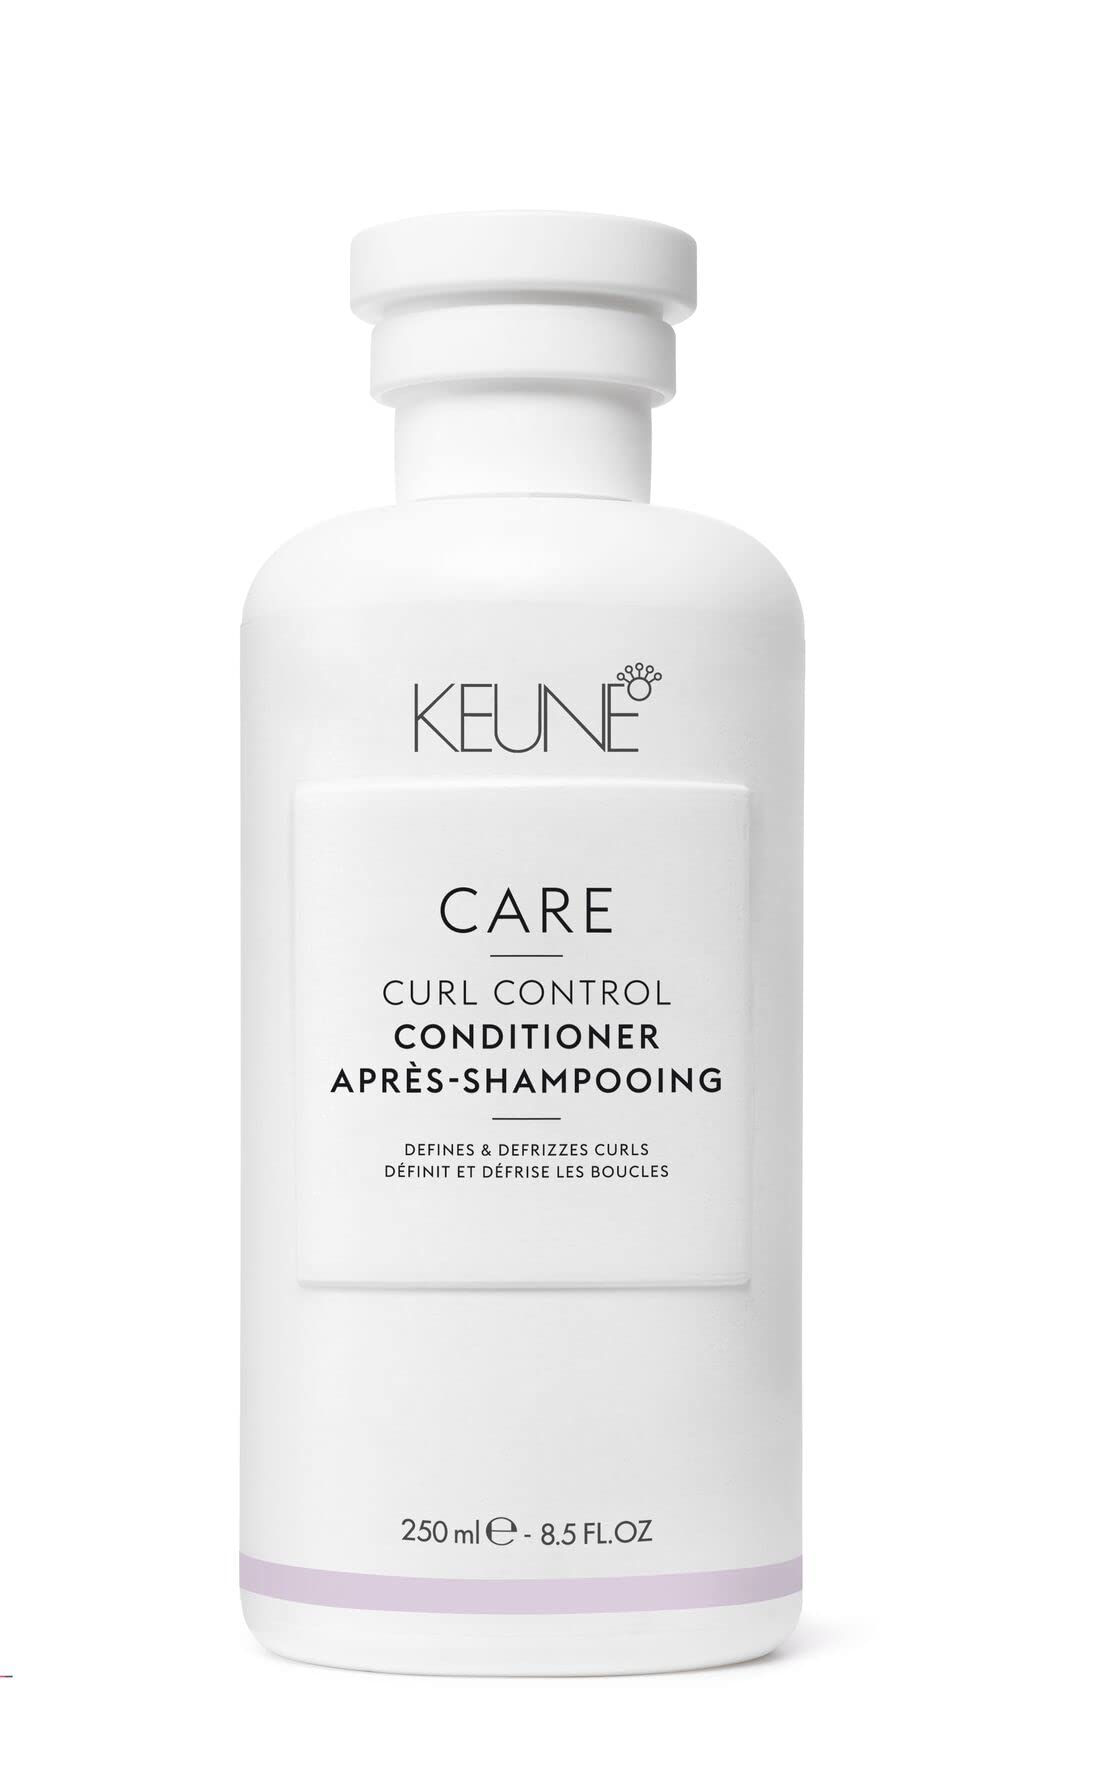 KEUNE CARE Curl Control Hair Care